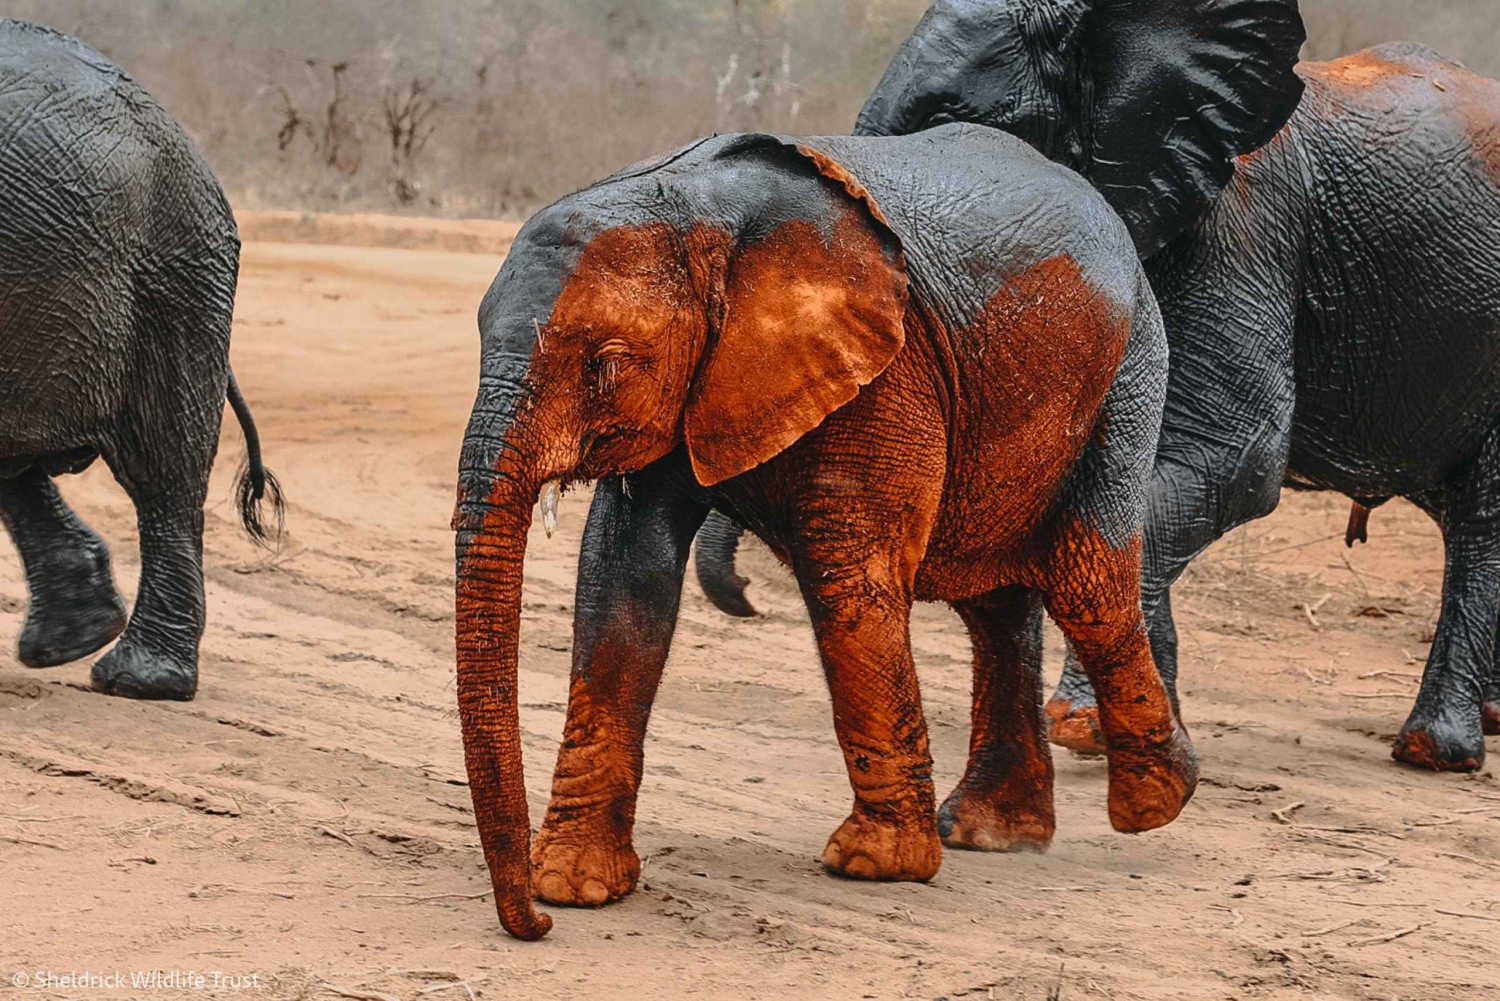 From Nairobi: David Sheldrick Elephant Orphanage Tour